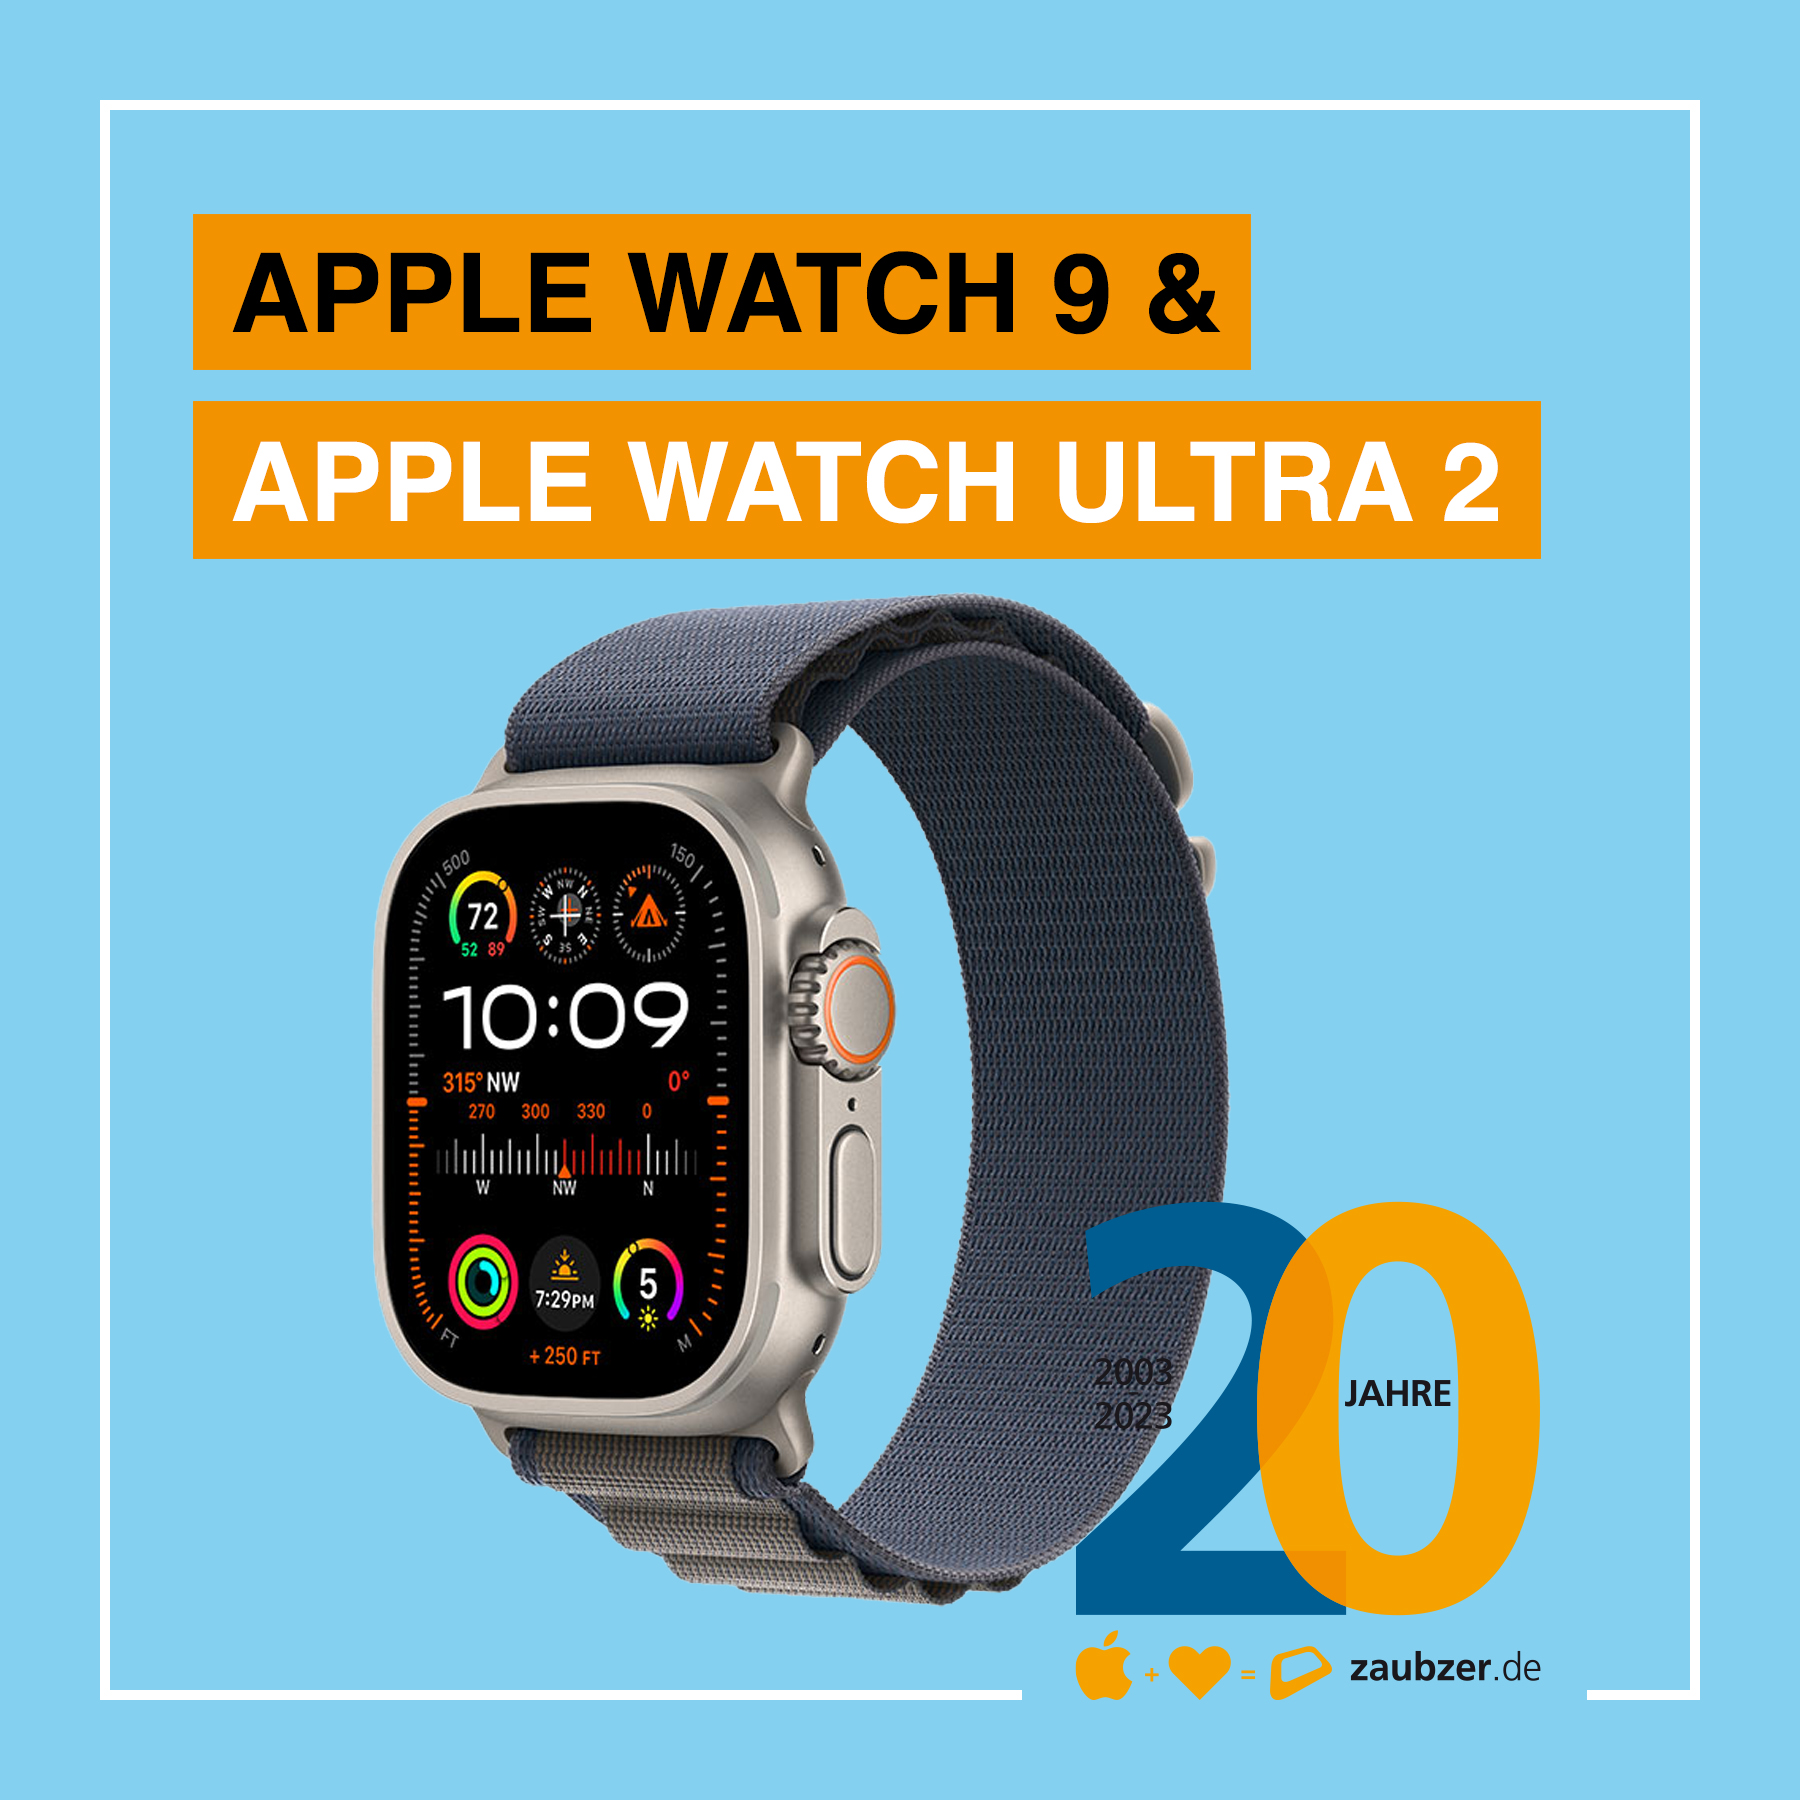 Apple Watch 9 - Apple Watch Ulta 9 - zaubzer.de Mannheim